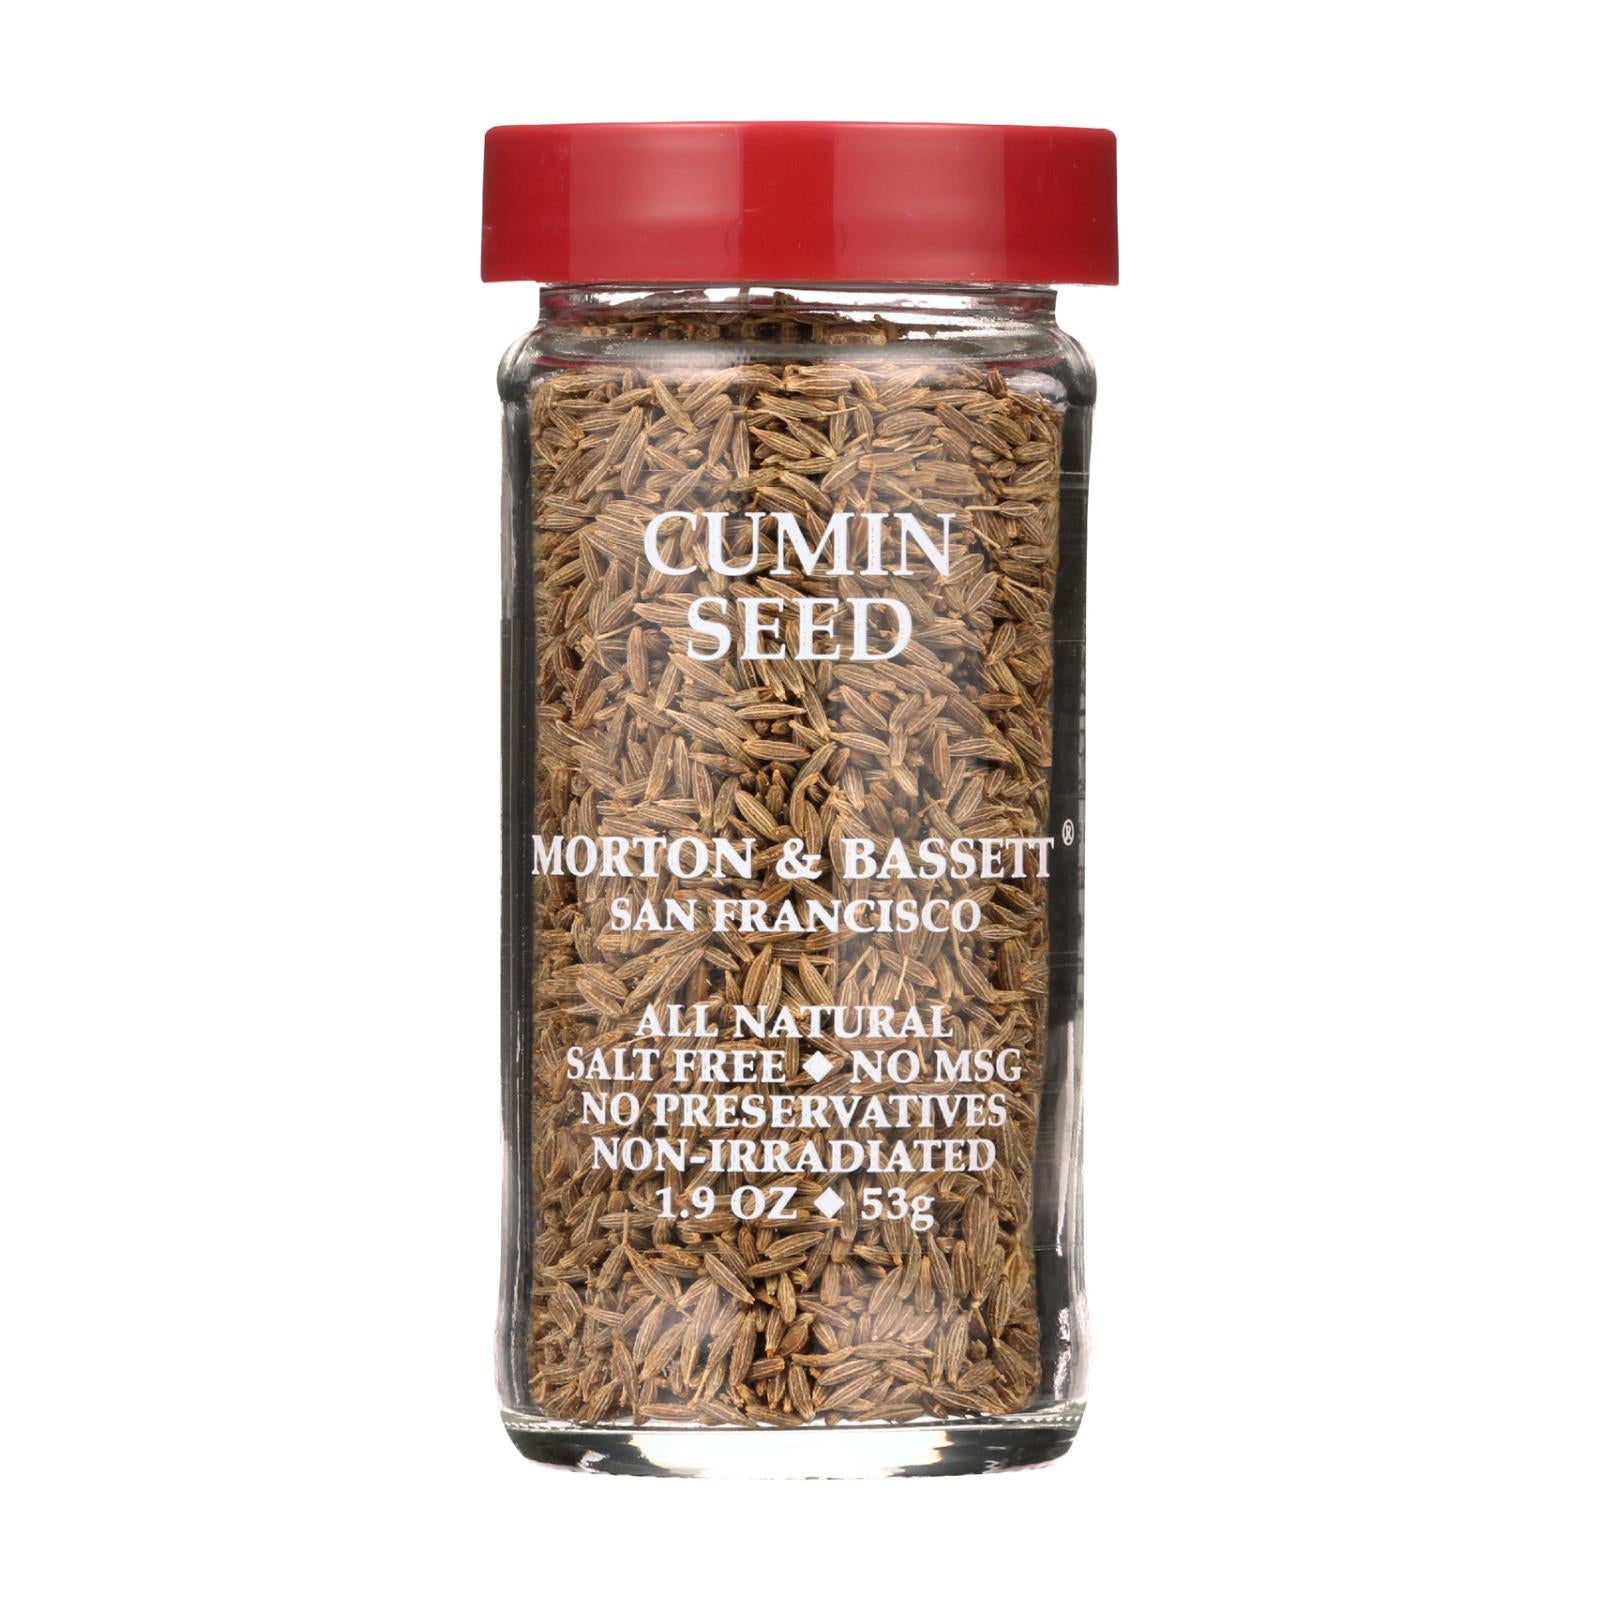 Morton And Bassett Seasoning - Cumin Seed - 2 Oz - Case Of 3 - Whole Green Foods